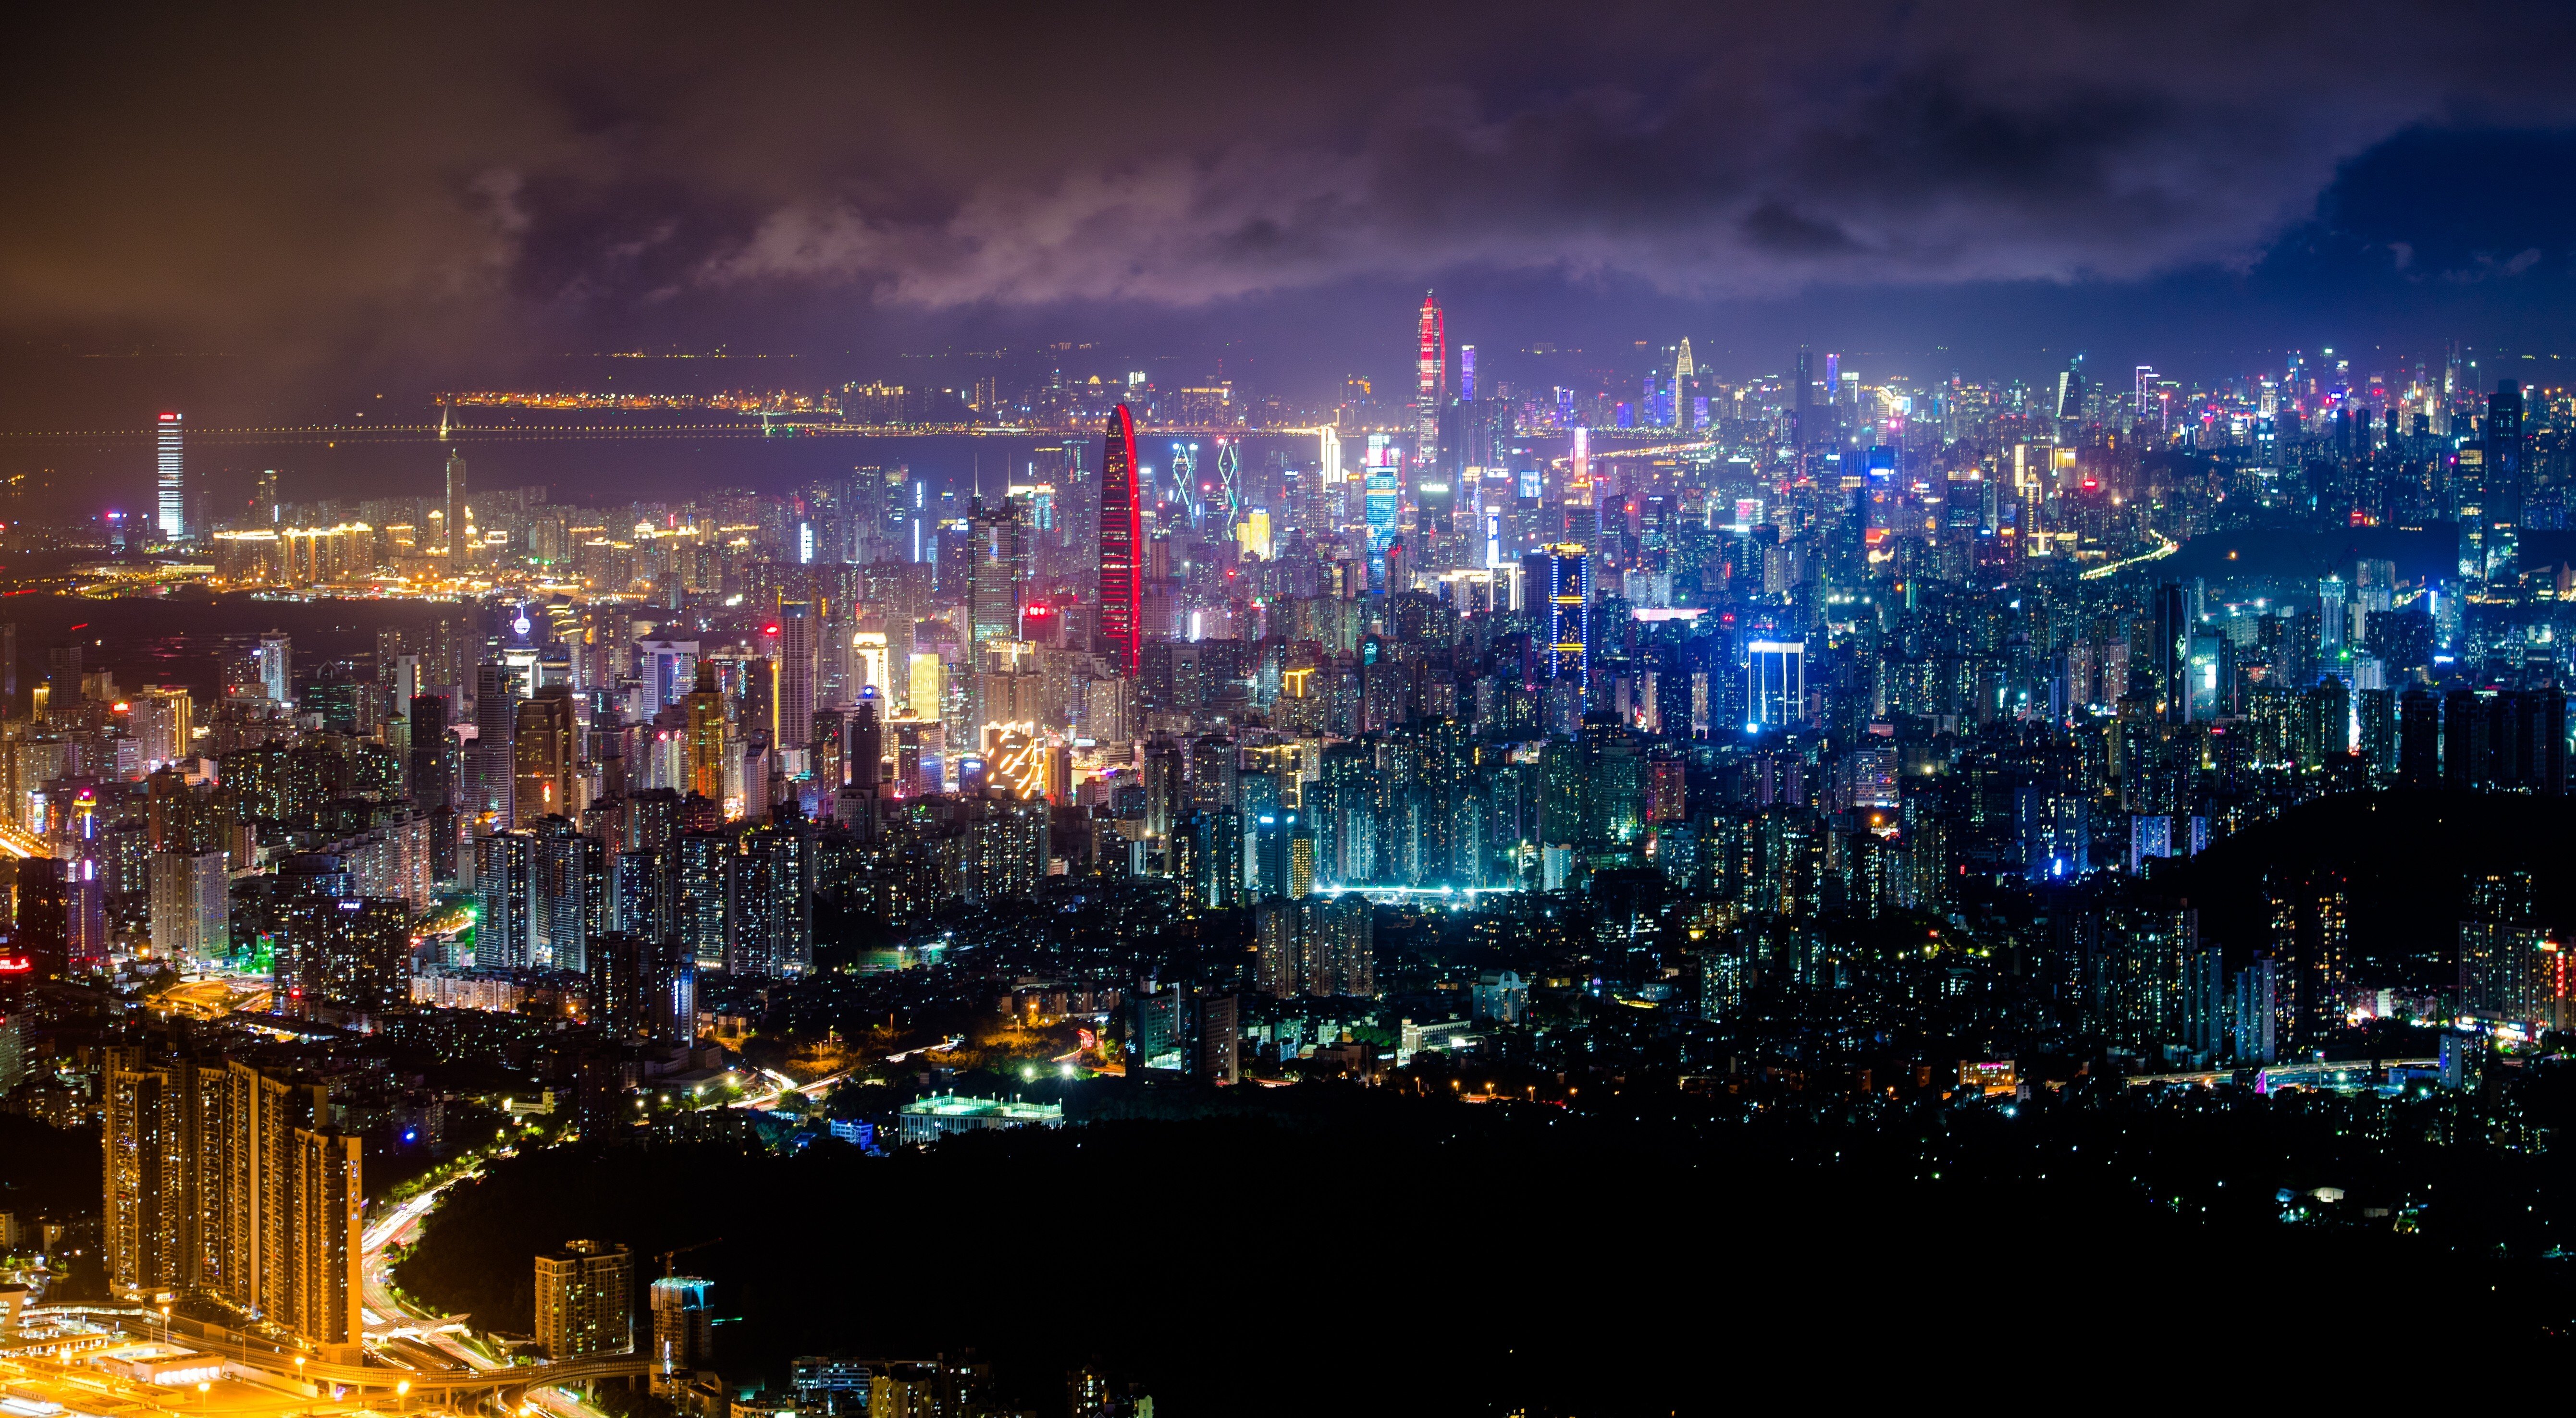 A night view of the Shenzhen skyline. Photo: Xinhua